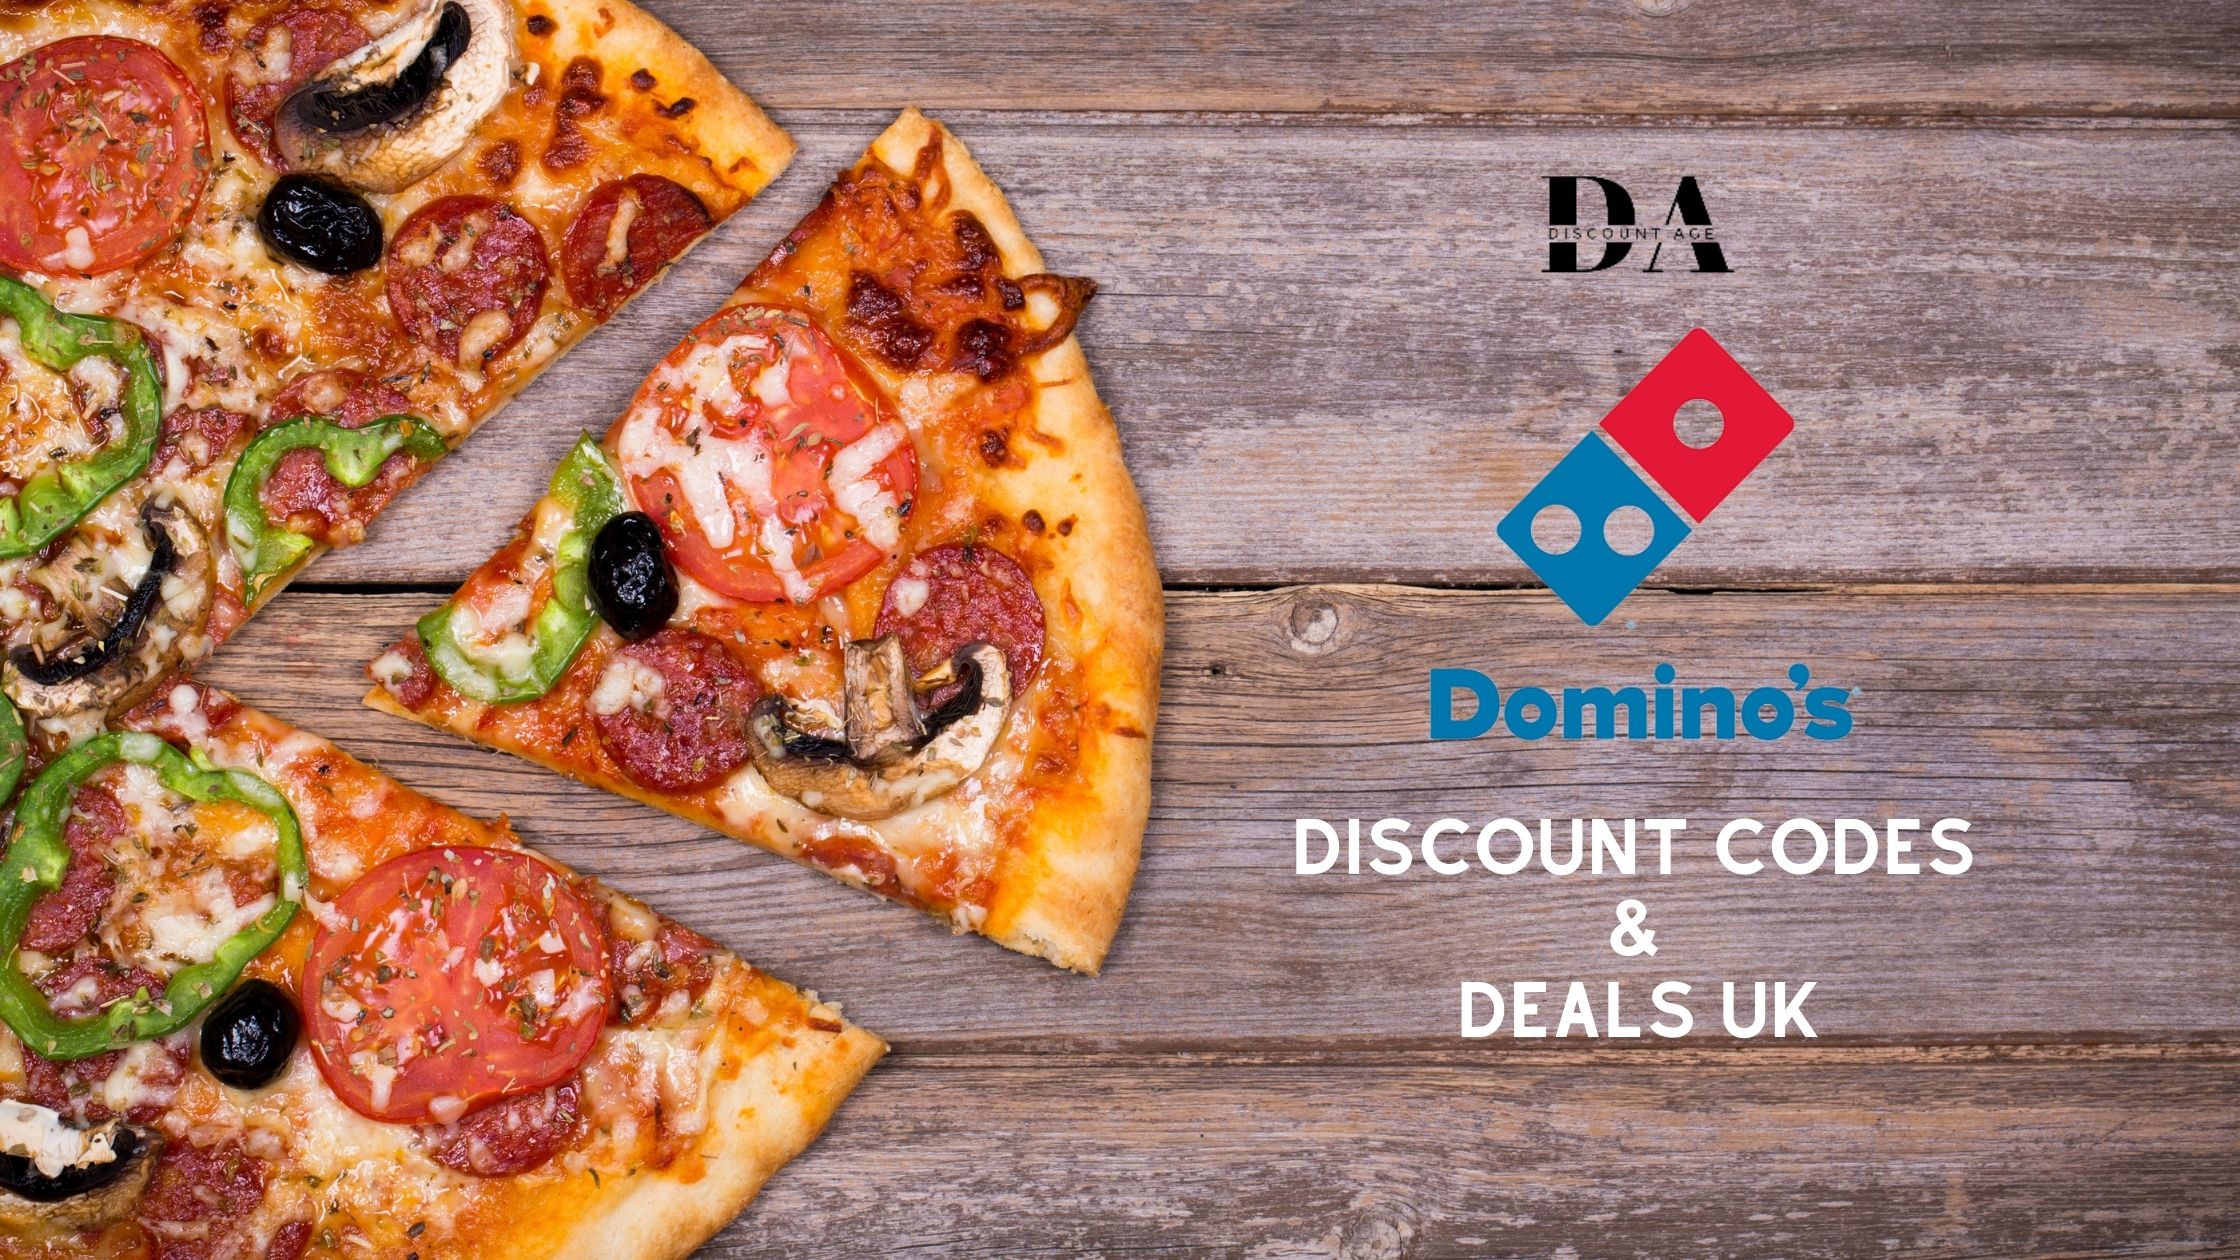 Dominos Discount Codes and Deals UK